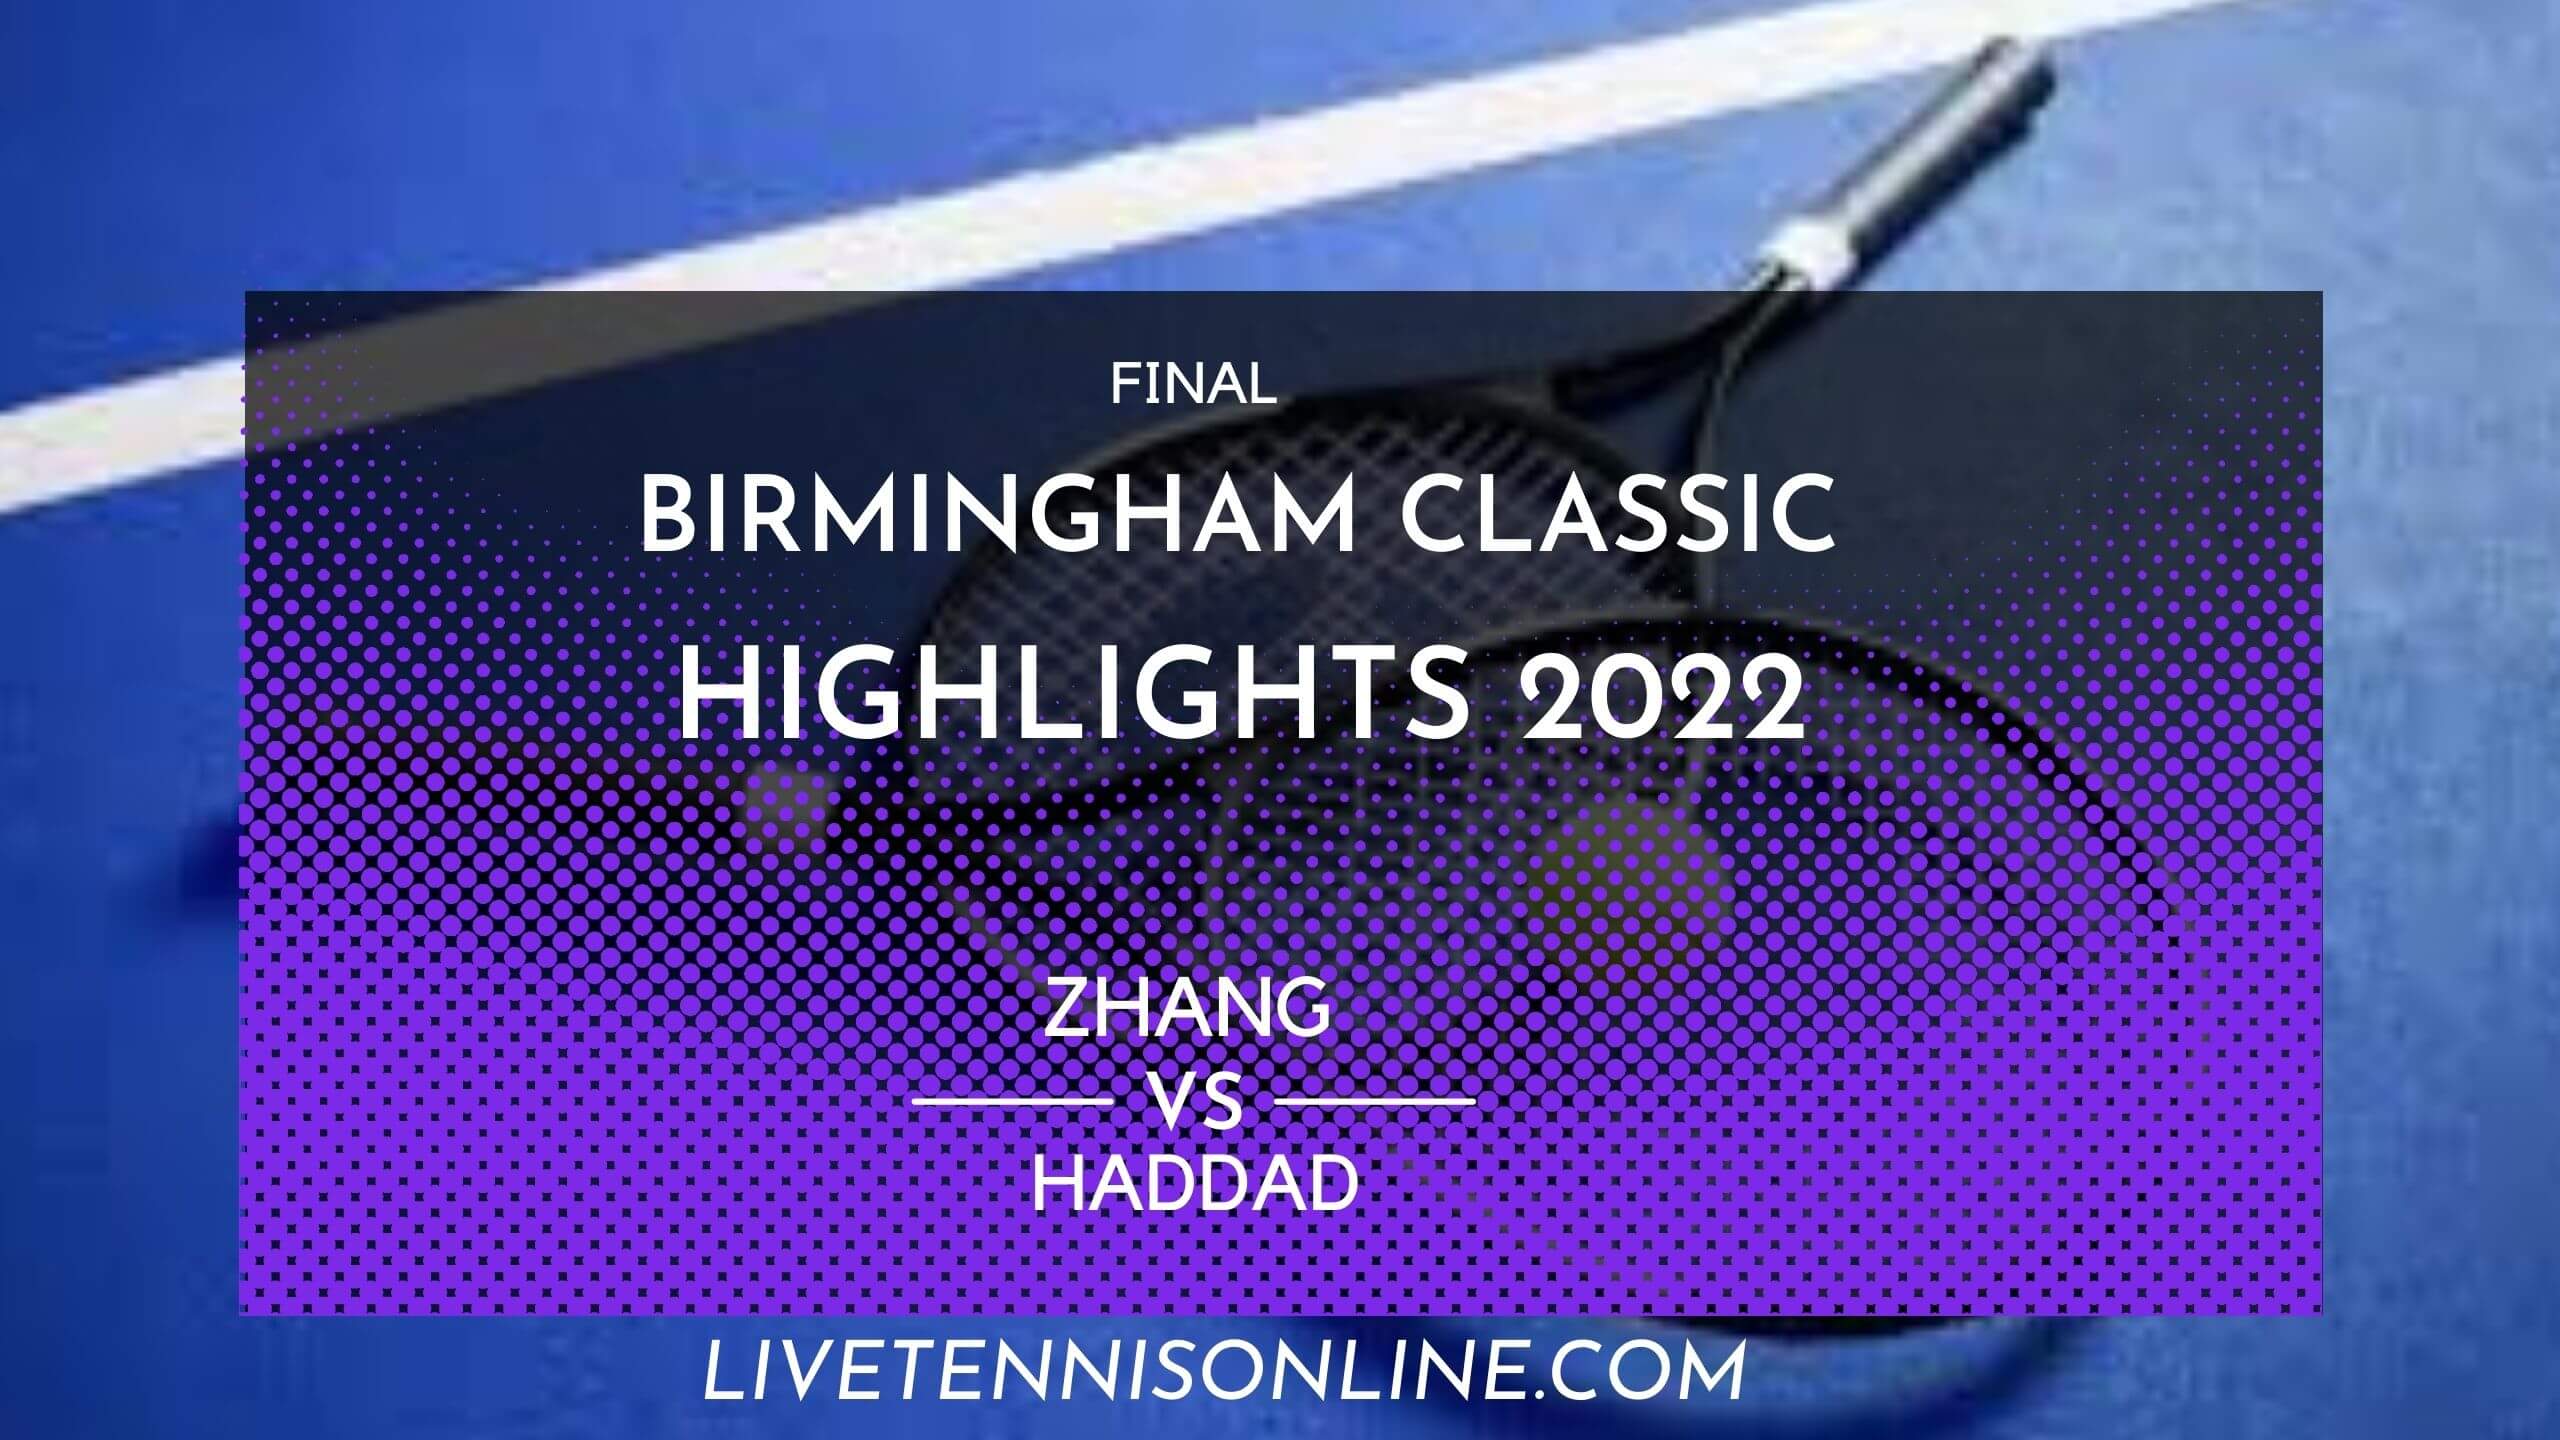 Zhang Vs Haddad Final Highlights 2022 Birmingham Classic